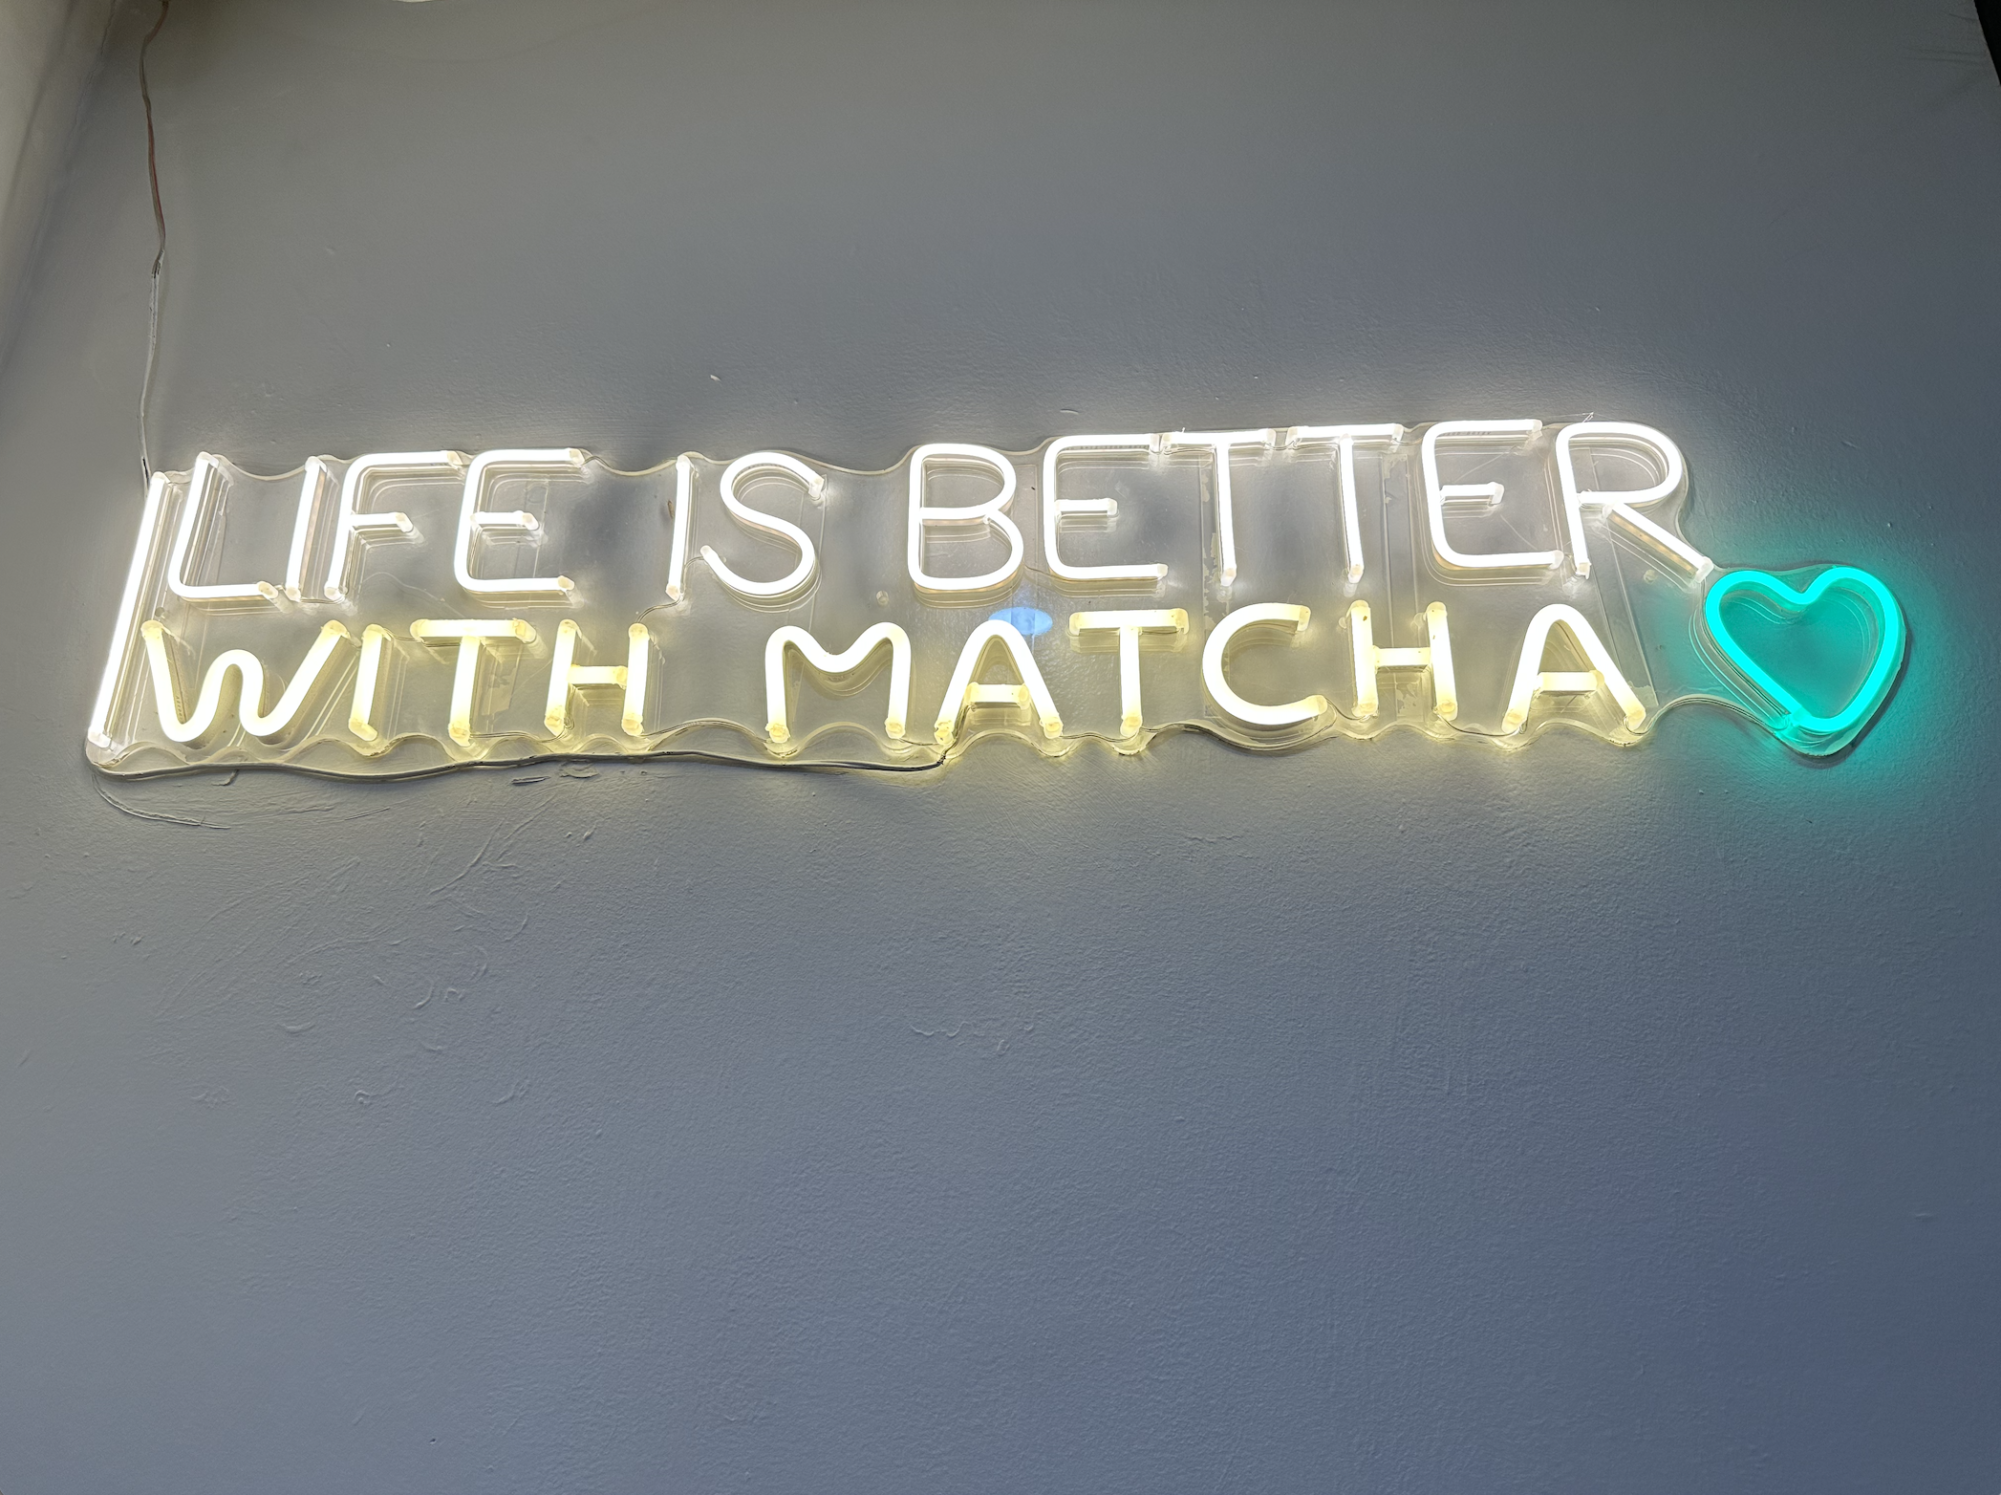 Getting a daily dose of “tea-riffic” matcha goodness at Matcha Café Maiko in Kearny Mesa